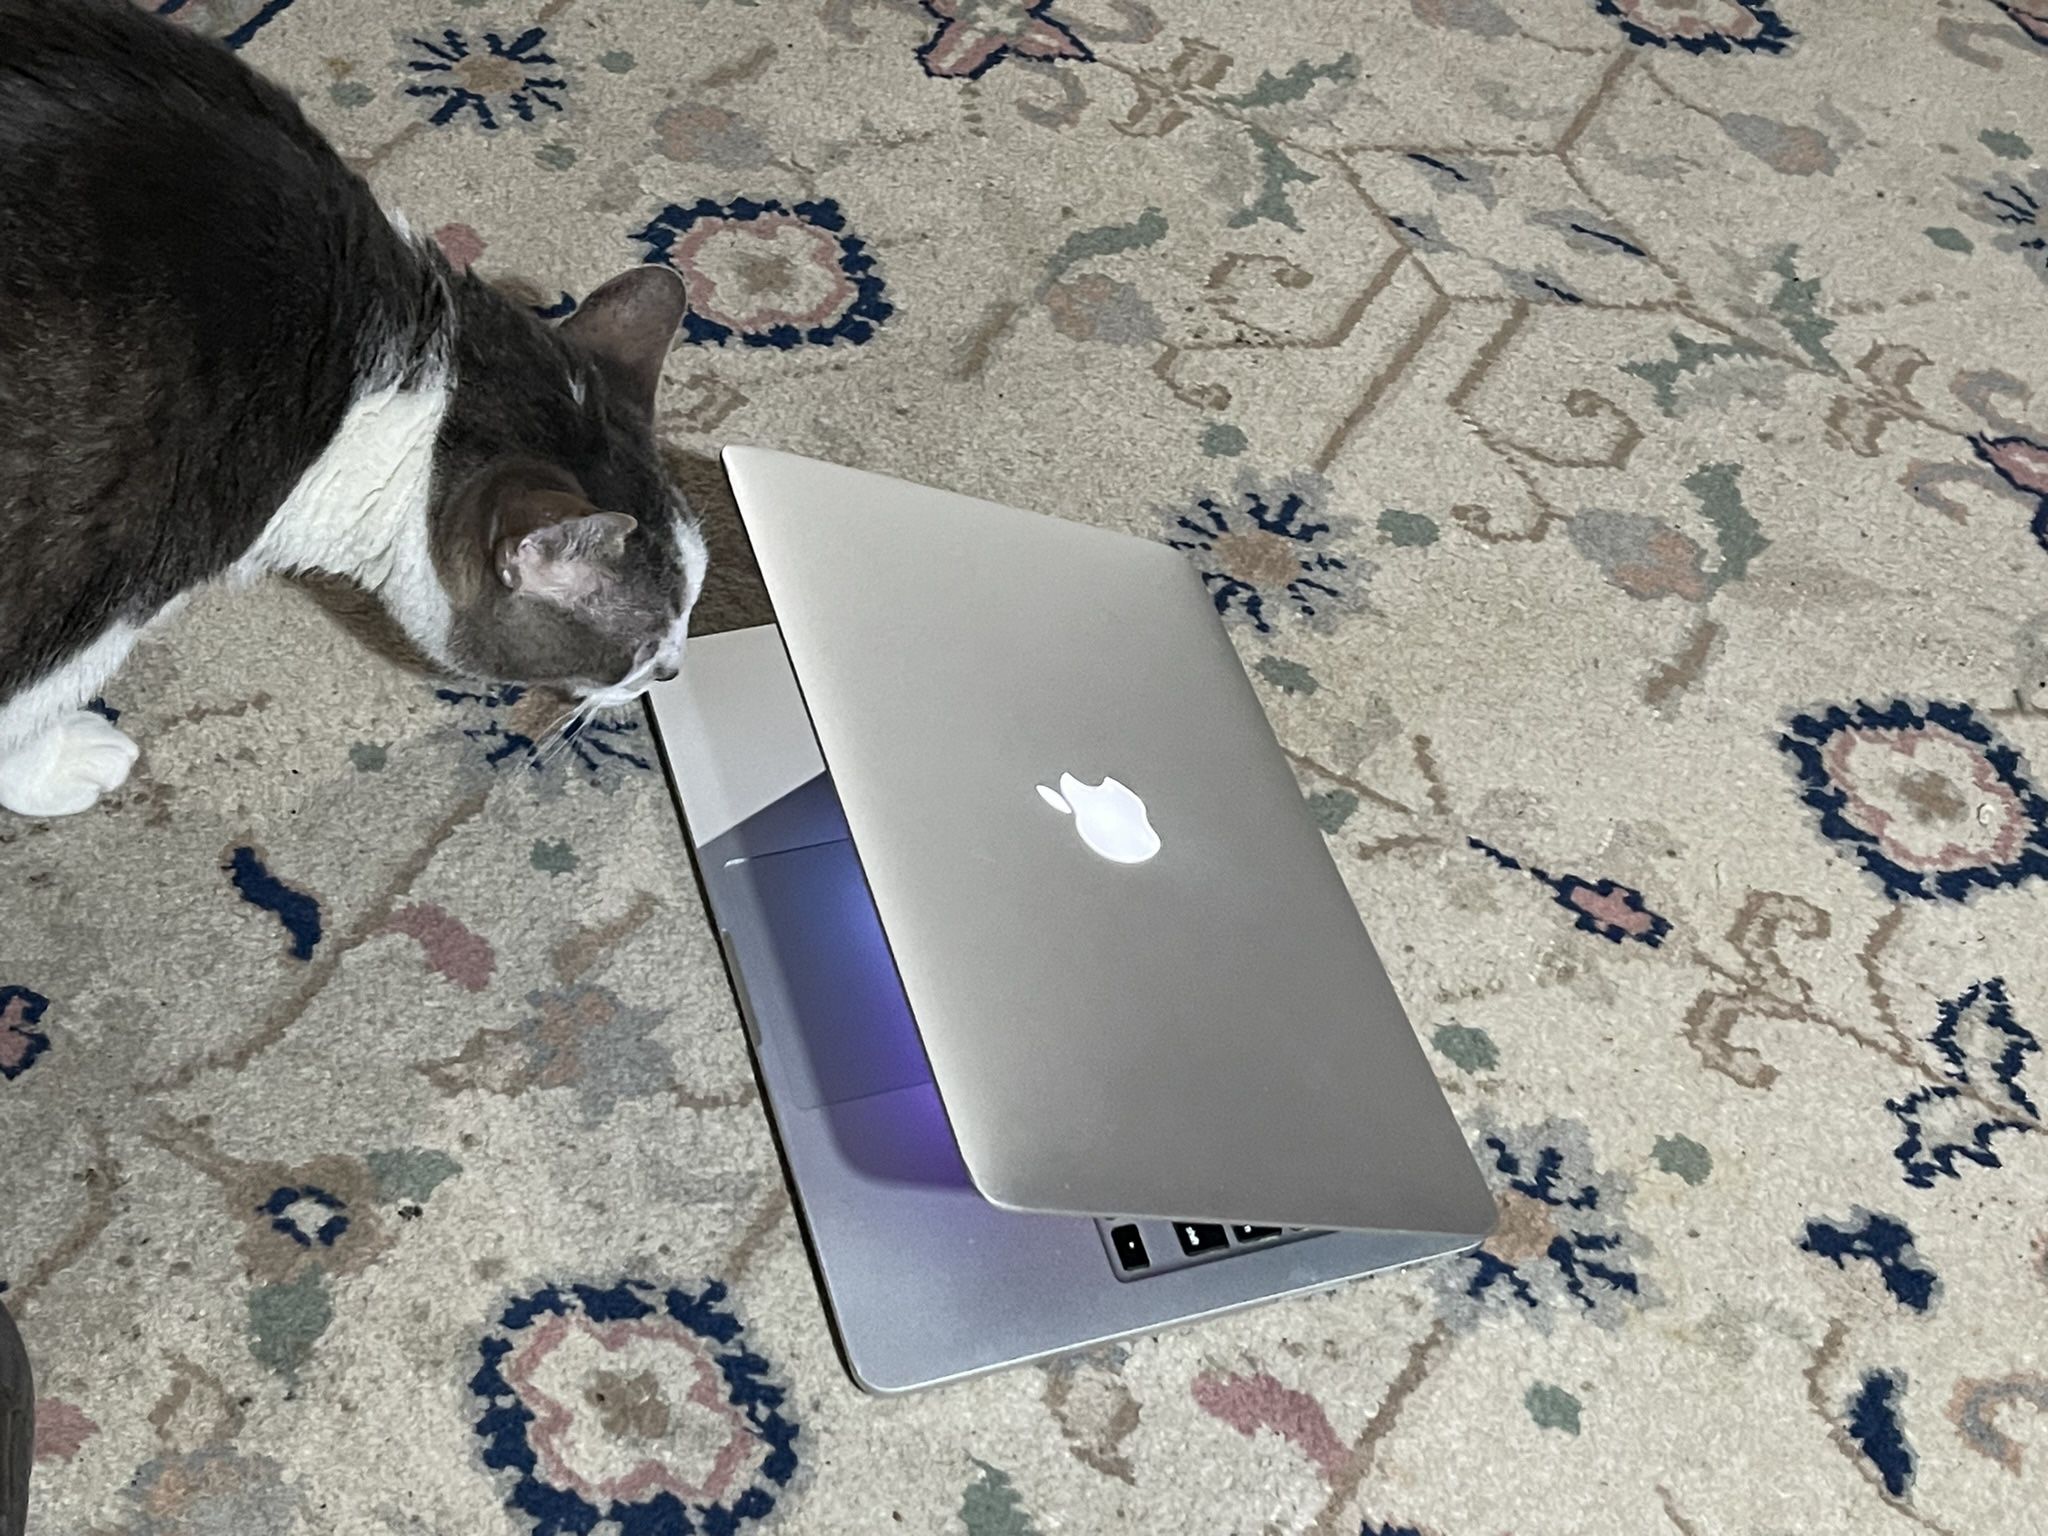 Apple MacBook Pro 15” Retina Quad core I7, 8Gn Ram, 256GB Ssd $250